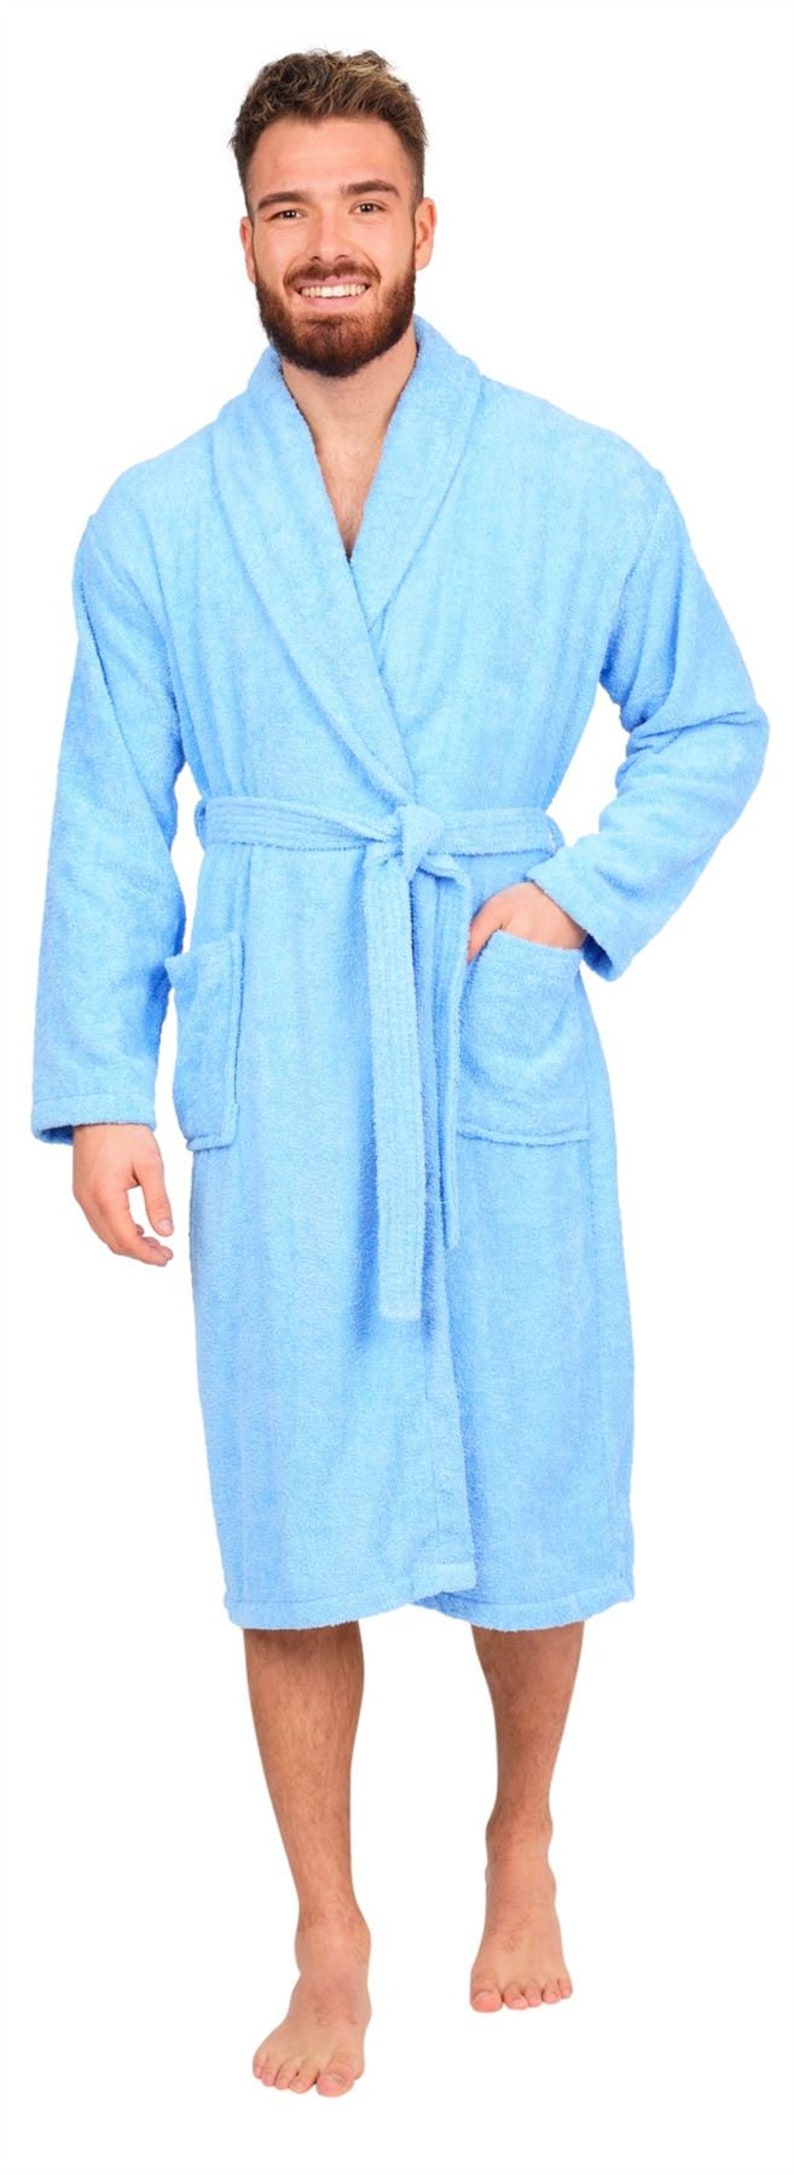 Mens Bathrobe 100% Cotton Terry Towelling Shawl Dressing Gown Bath Robe Light Blue